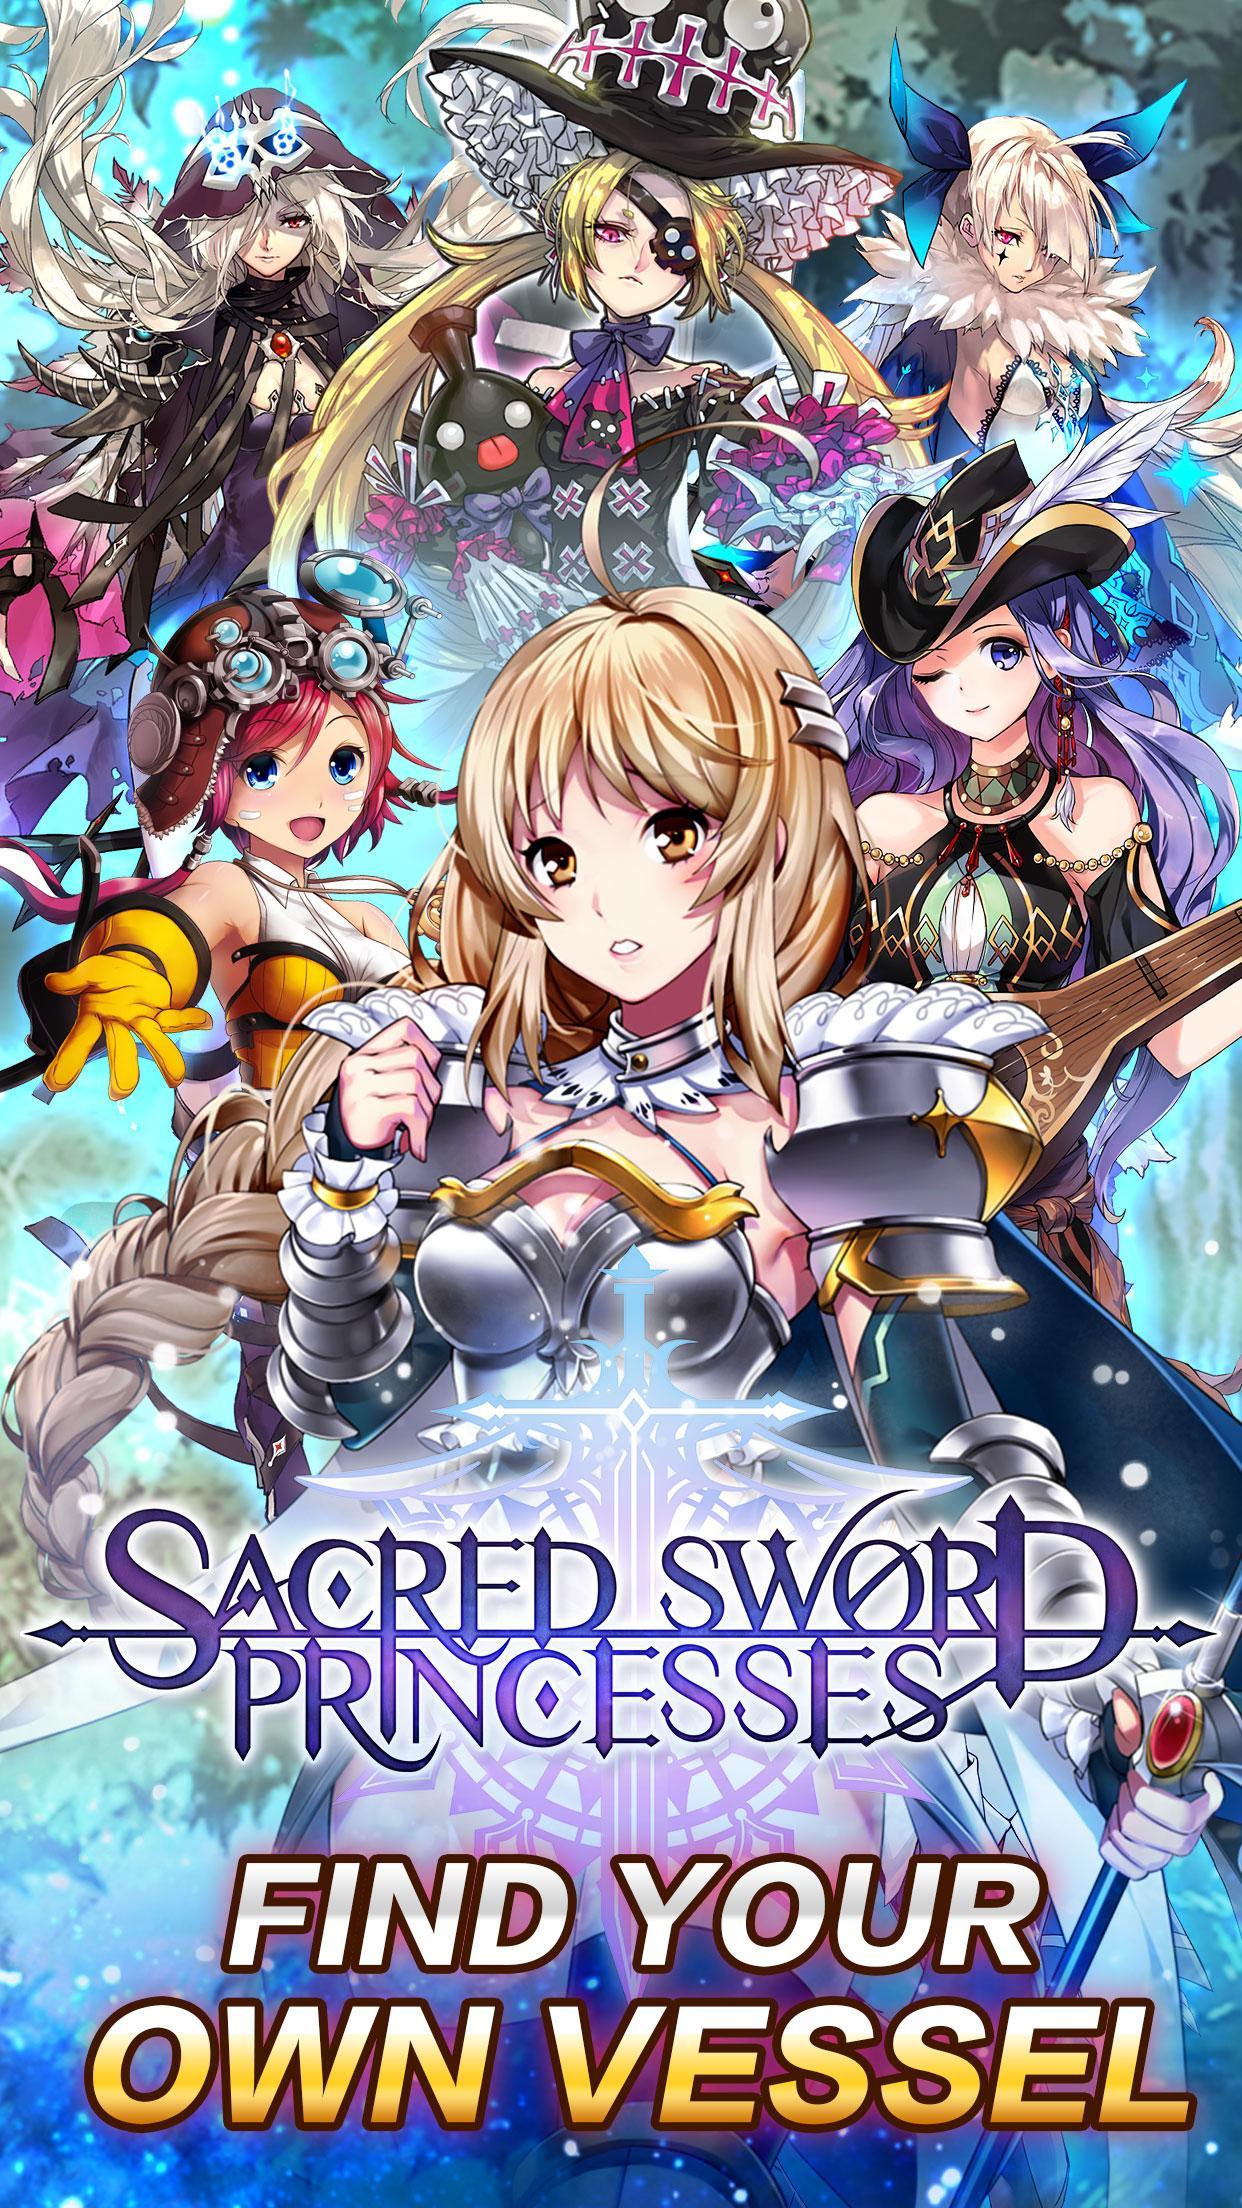 Screenshot 1 of Princesas de la espada sagrada 